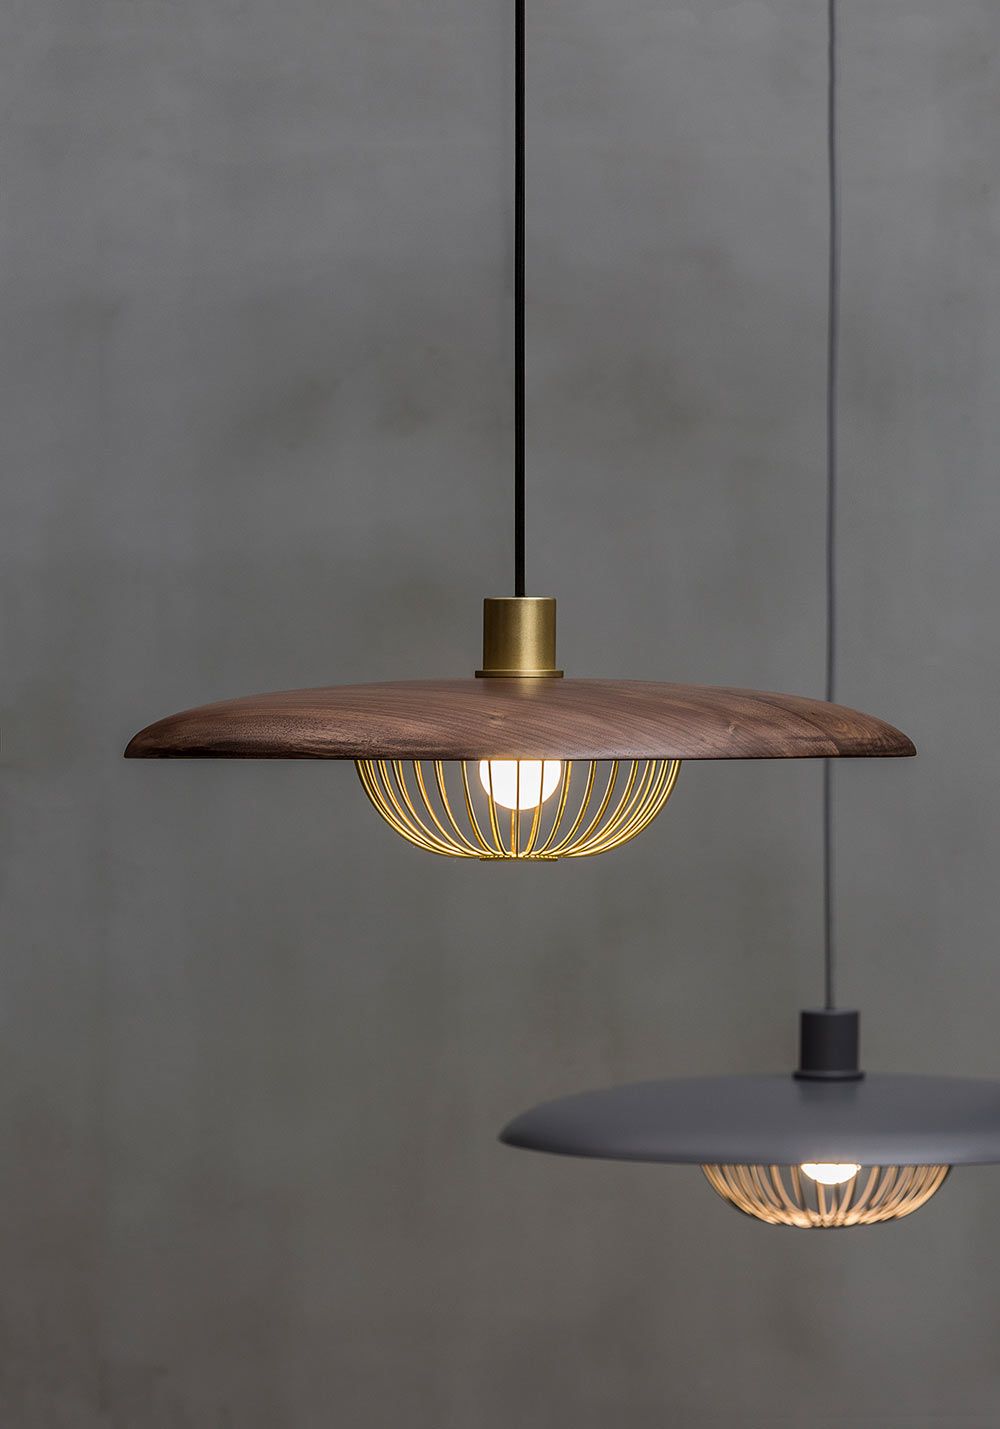 Ziihome Releases Kasa Lamp, Its First Light Designed by Yen-Hao, Chu - Design Milk